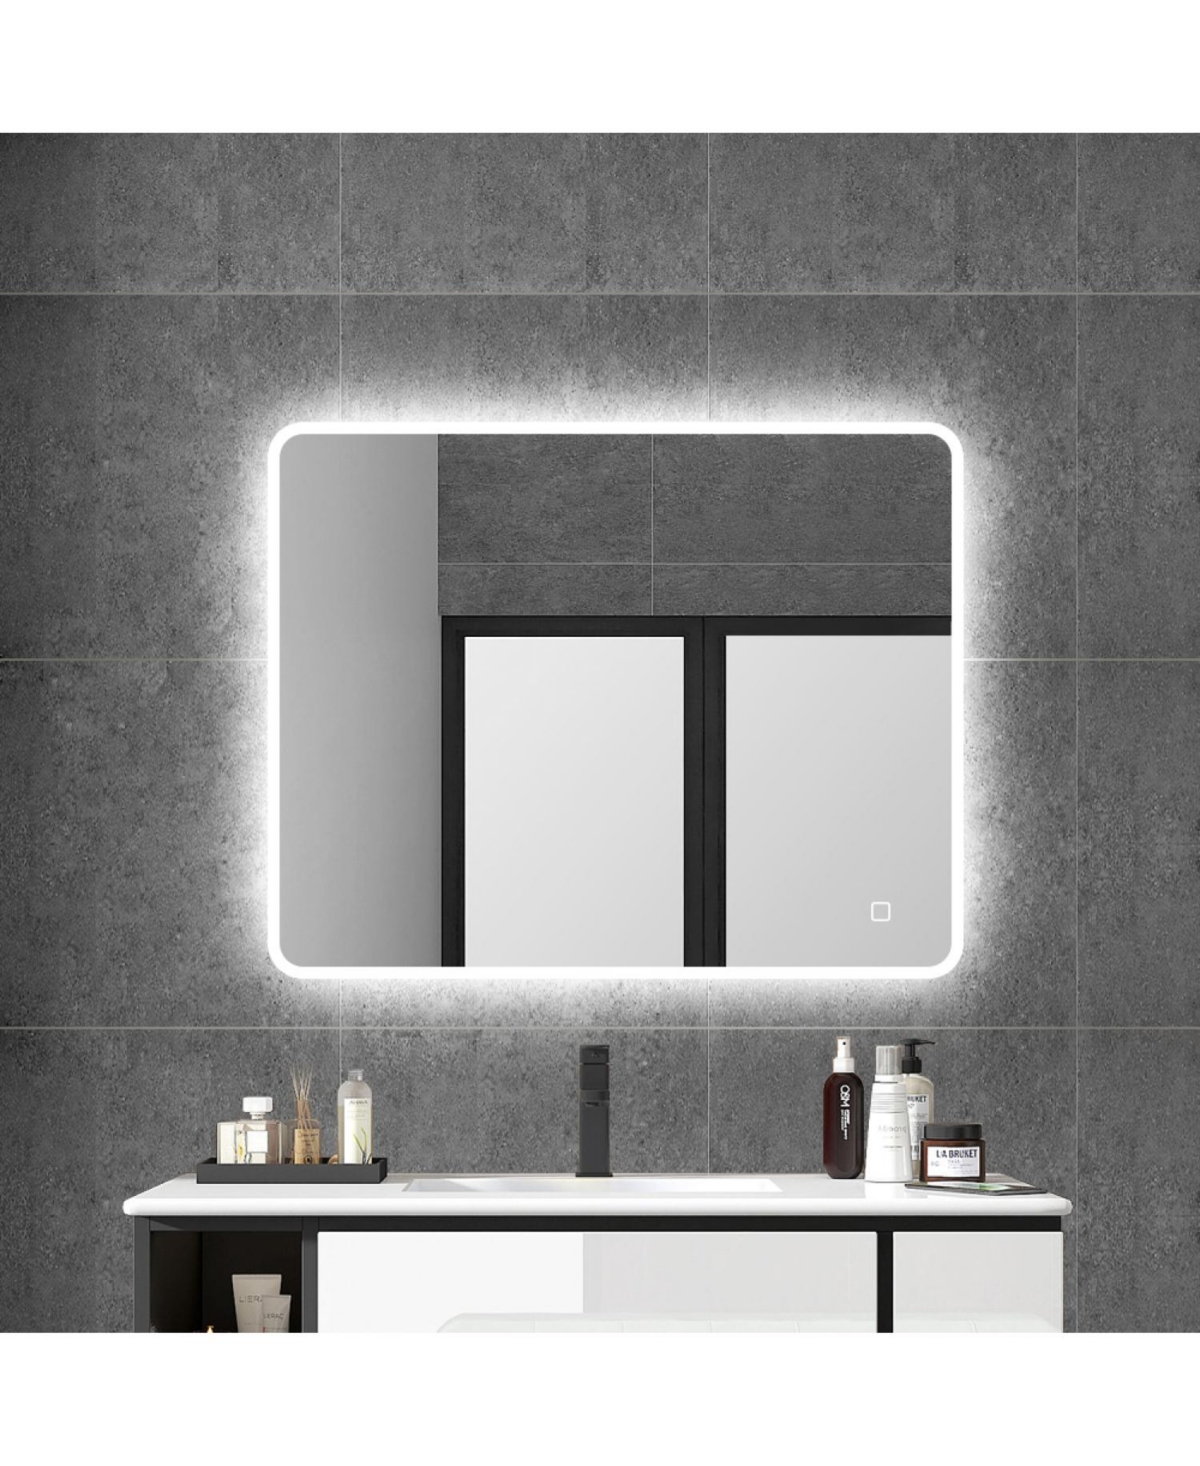 36 X 28 In. Large Rectangular Frameless Wall-Mount Anti-Fog Led Light Bathroom Vanity Mirror - Silver